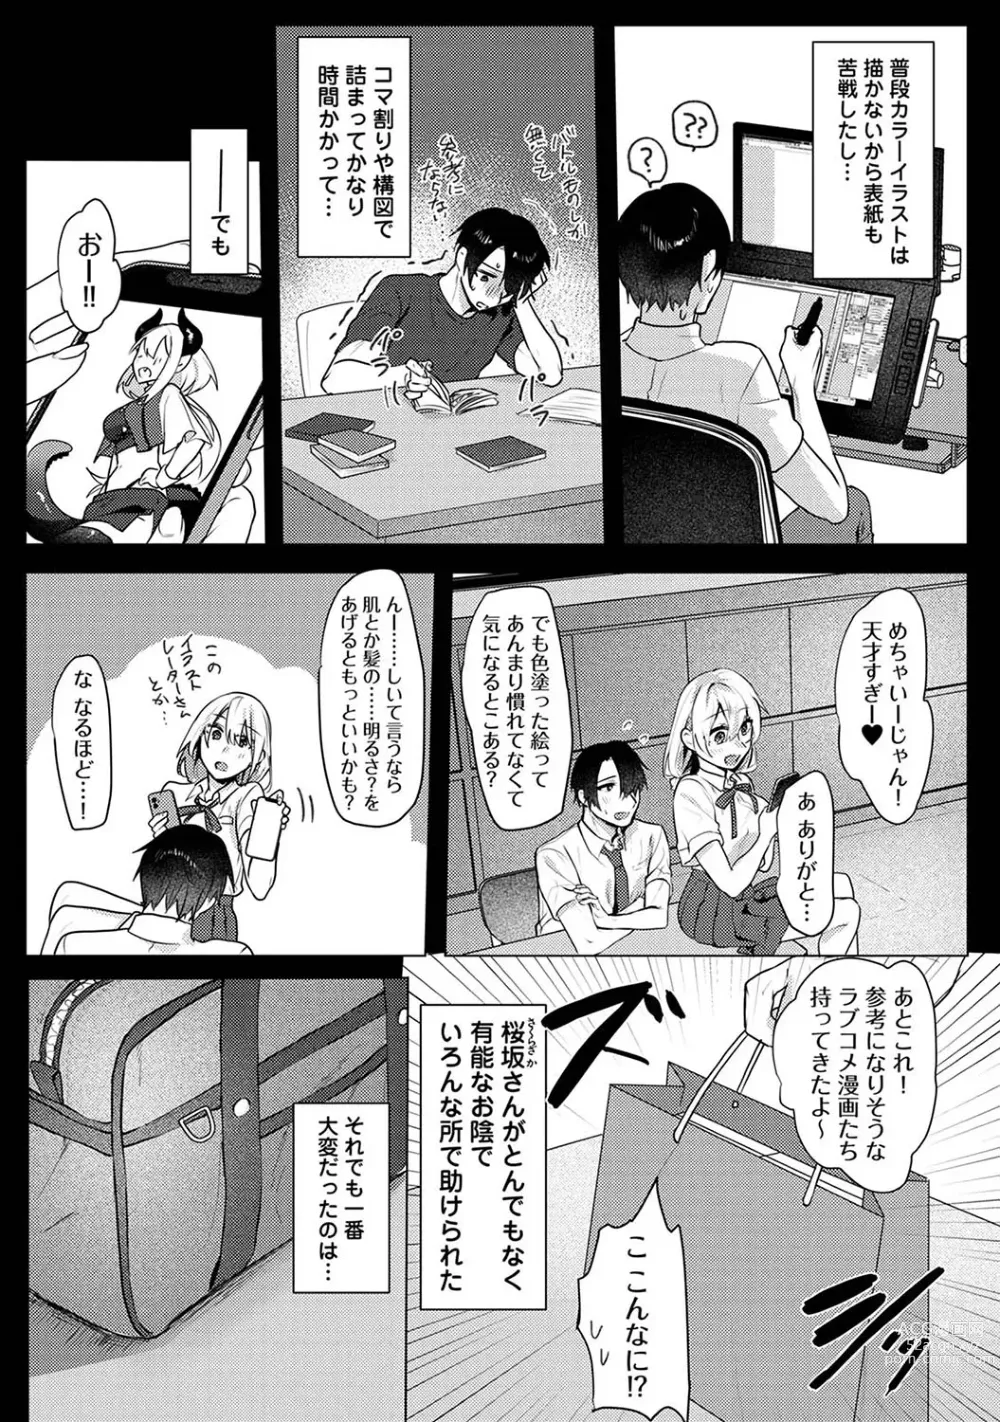 Page 3 of manga Otaku-kun, doujinshi sokubaikai detekunne!? Ch. 3